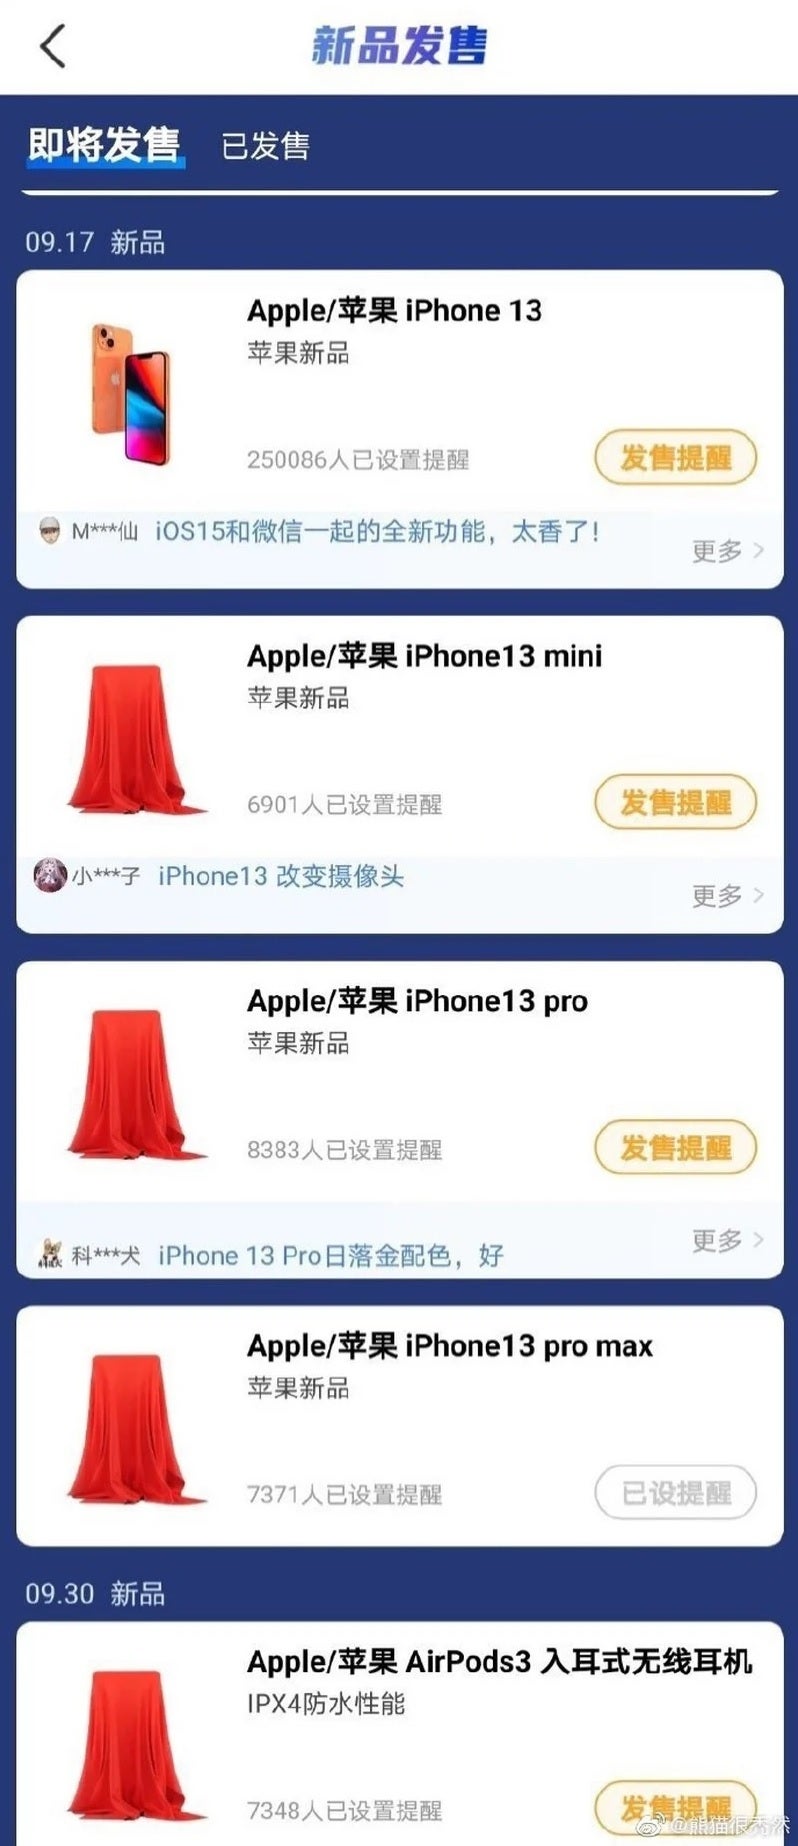 5G Apple iPhone 13